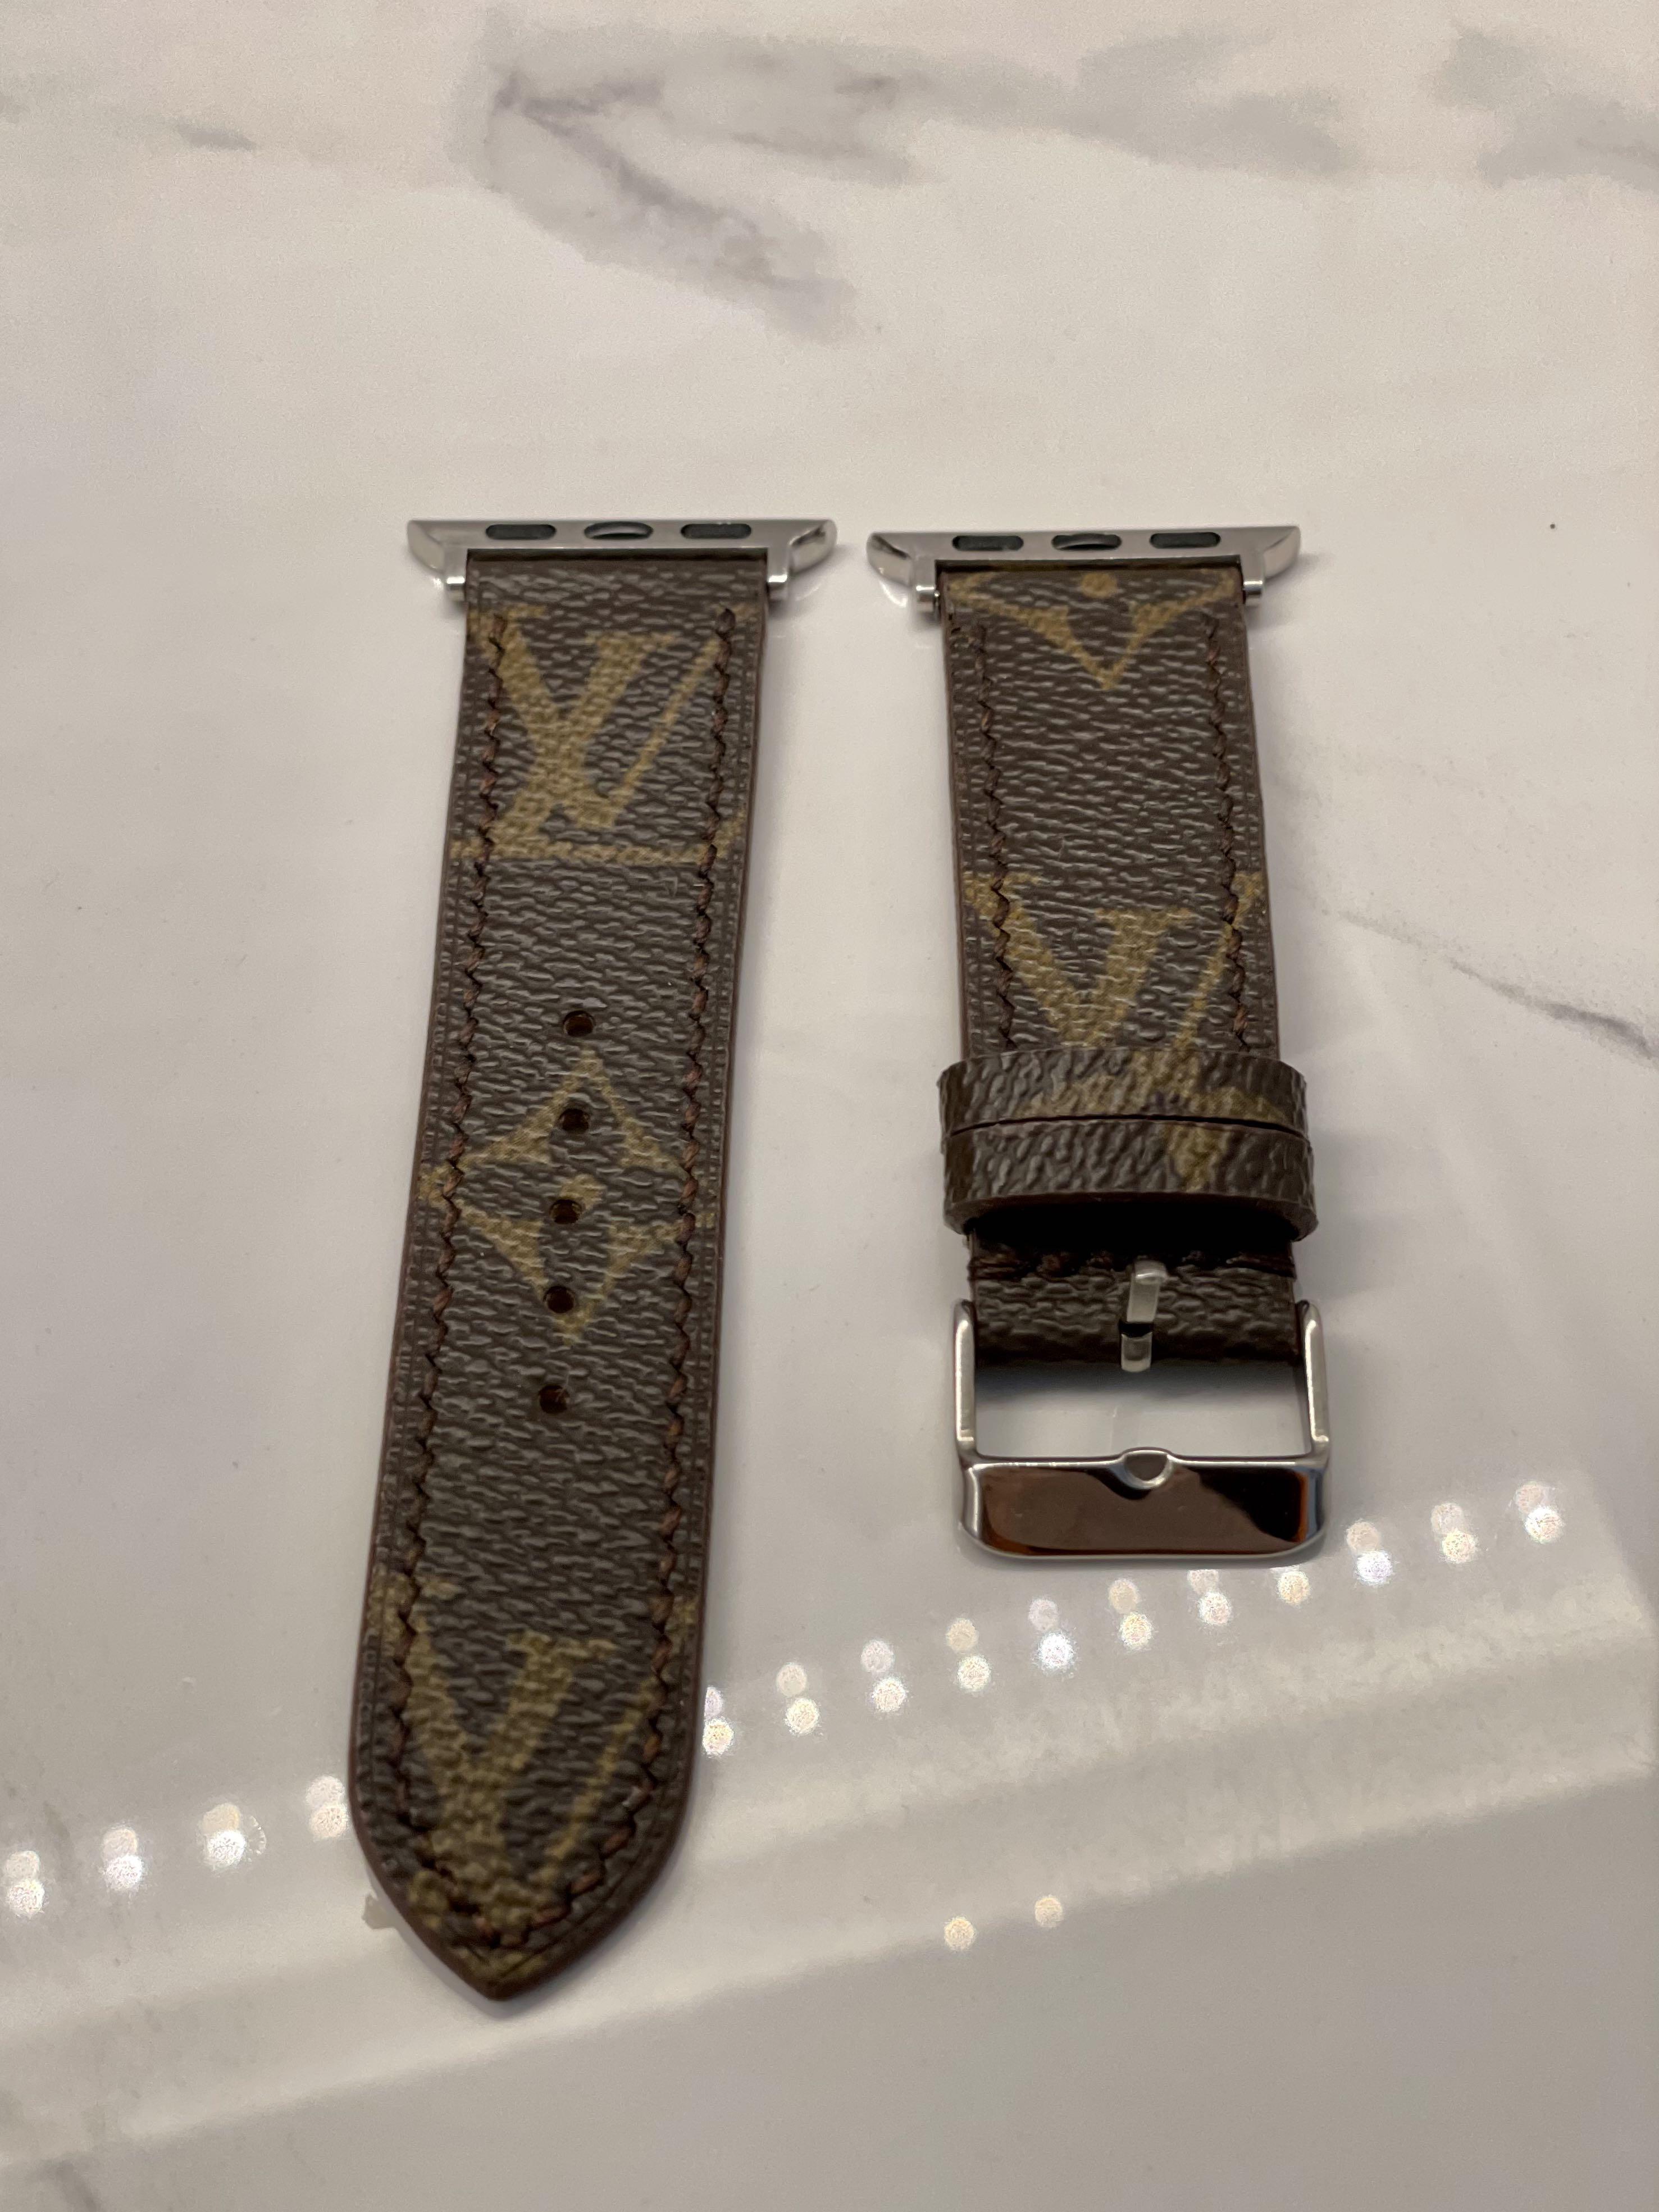 Louis Vuitton Apple Watch Wristband on Sale  sweetlygr 1690941561